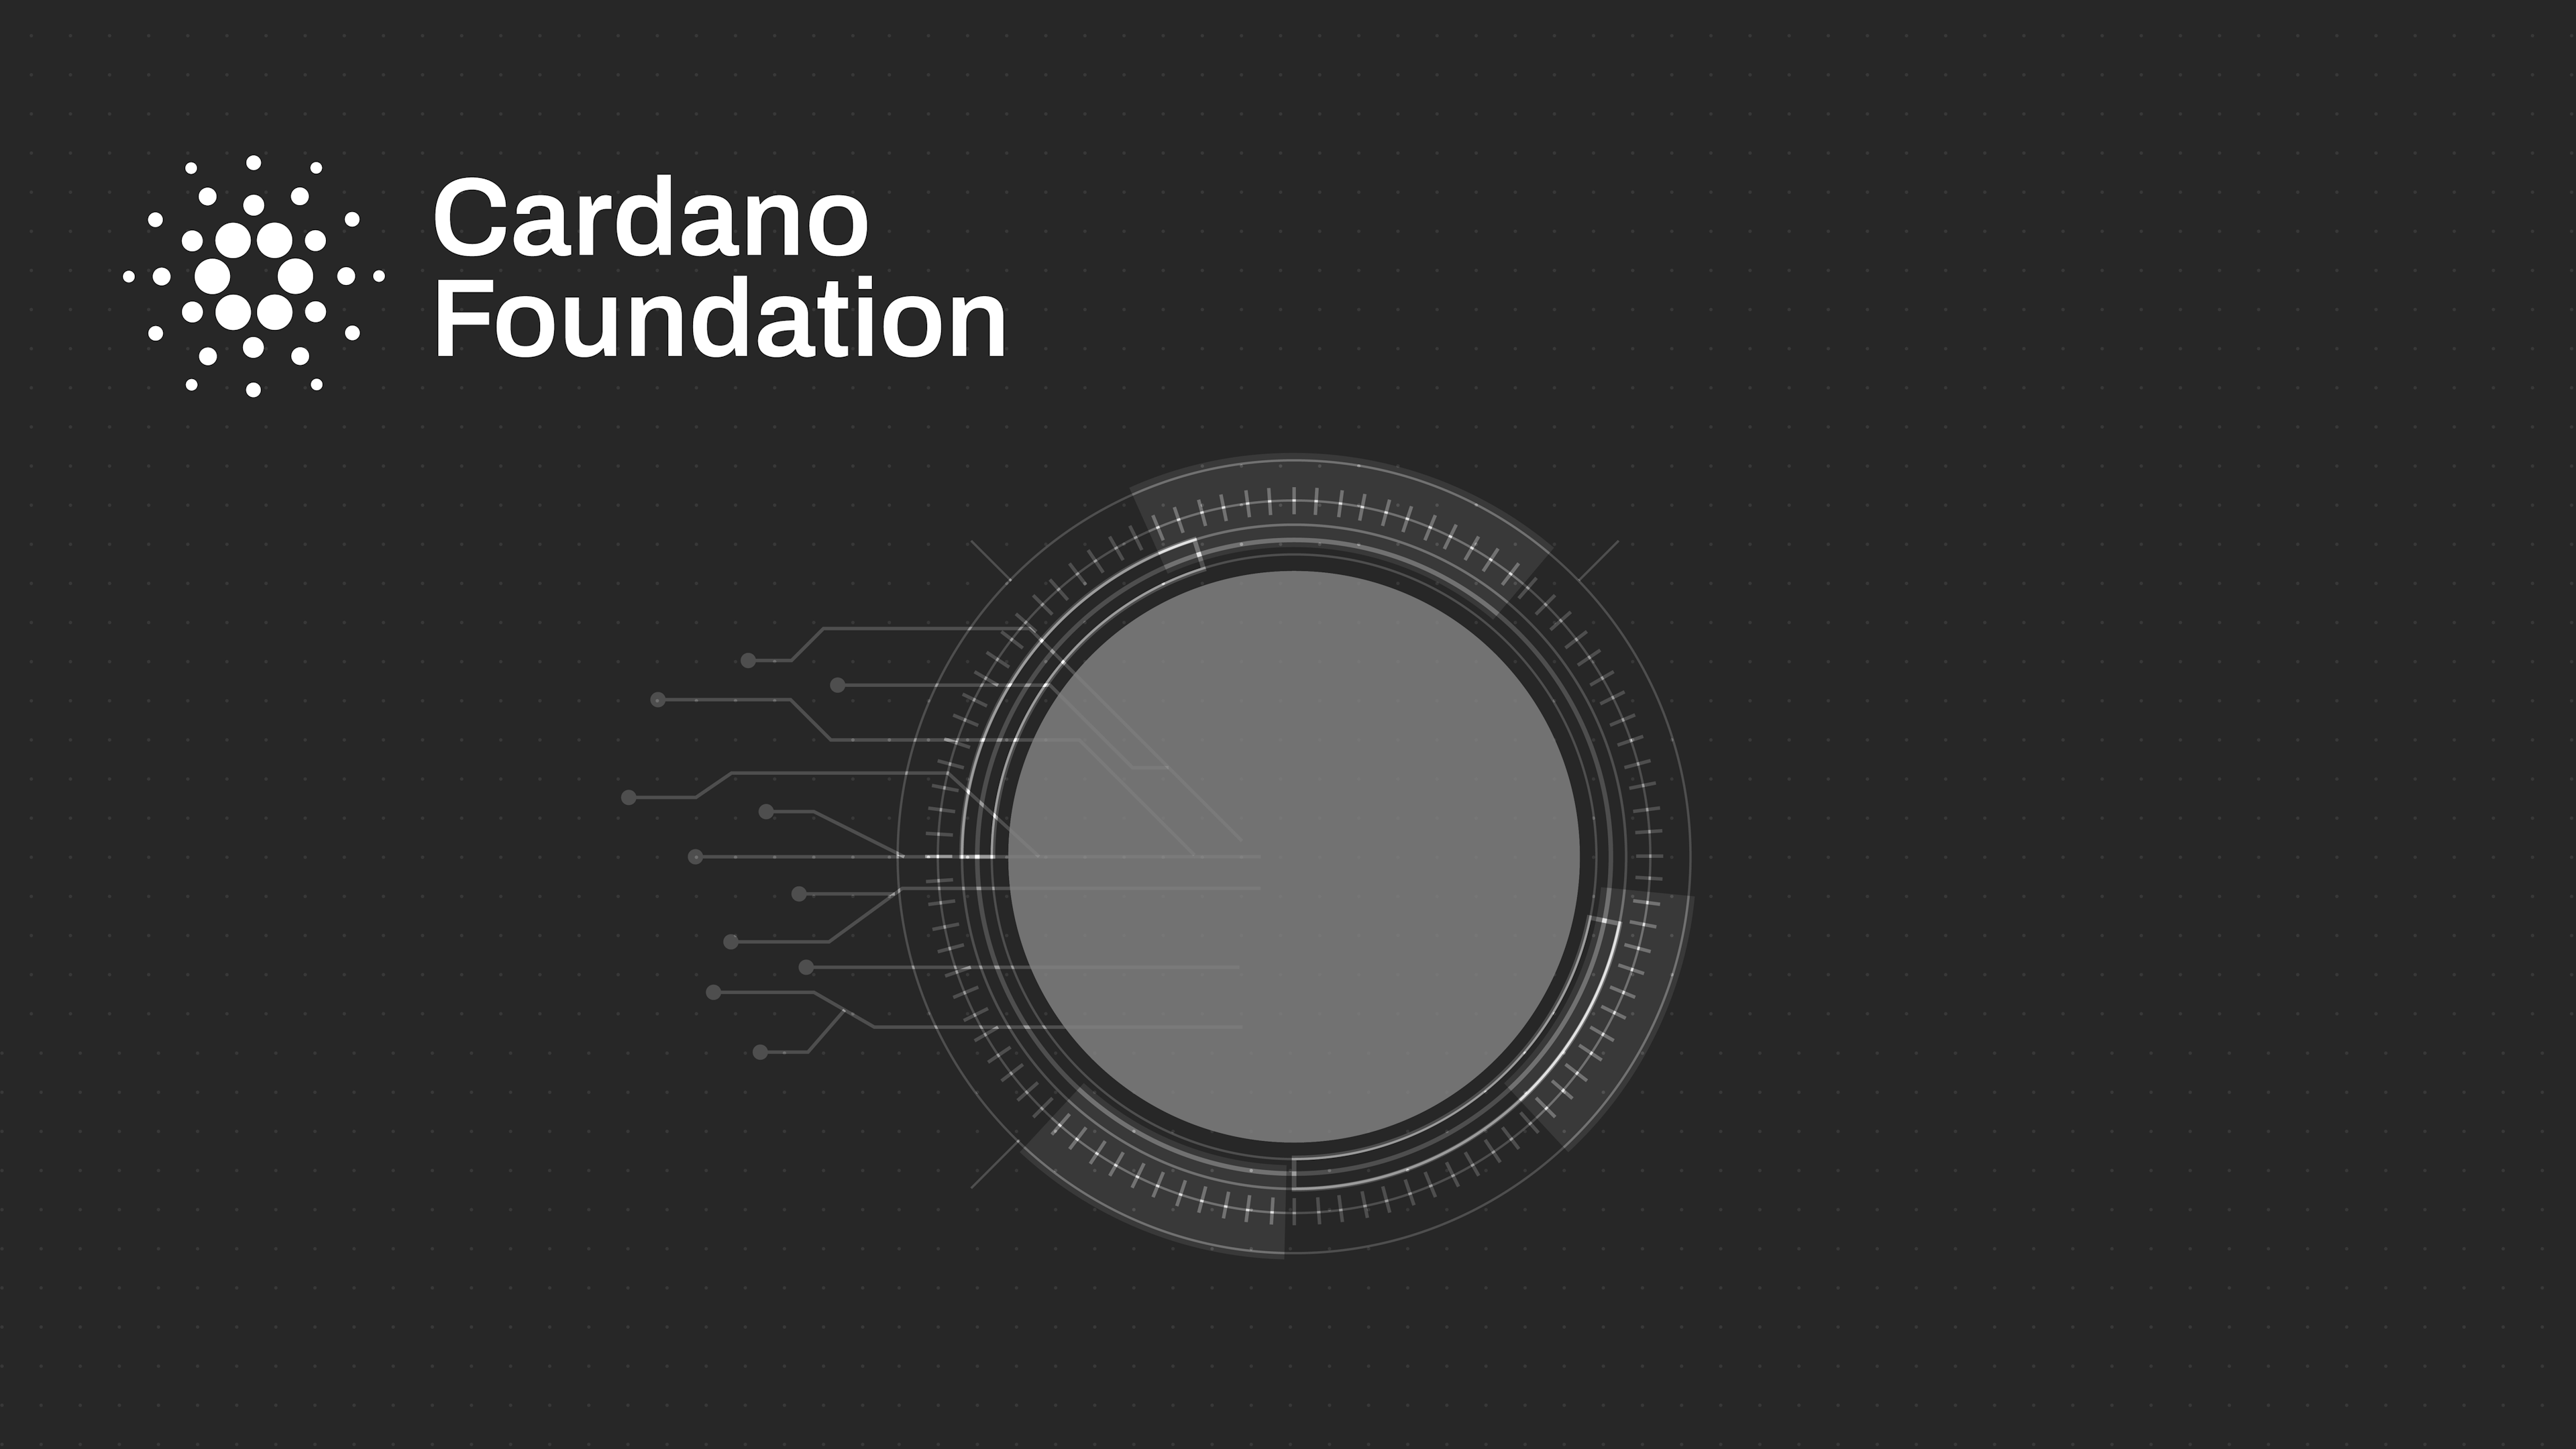 Cardano Foundation logo with black background and grey circle